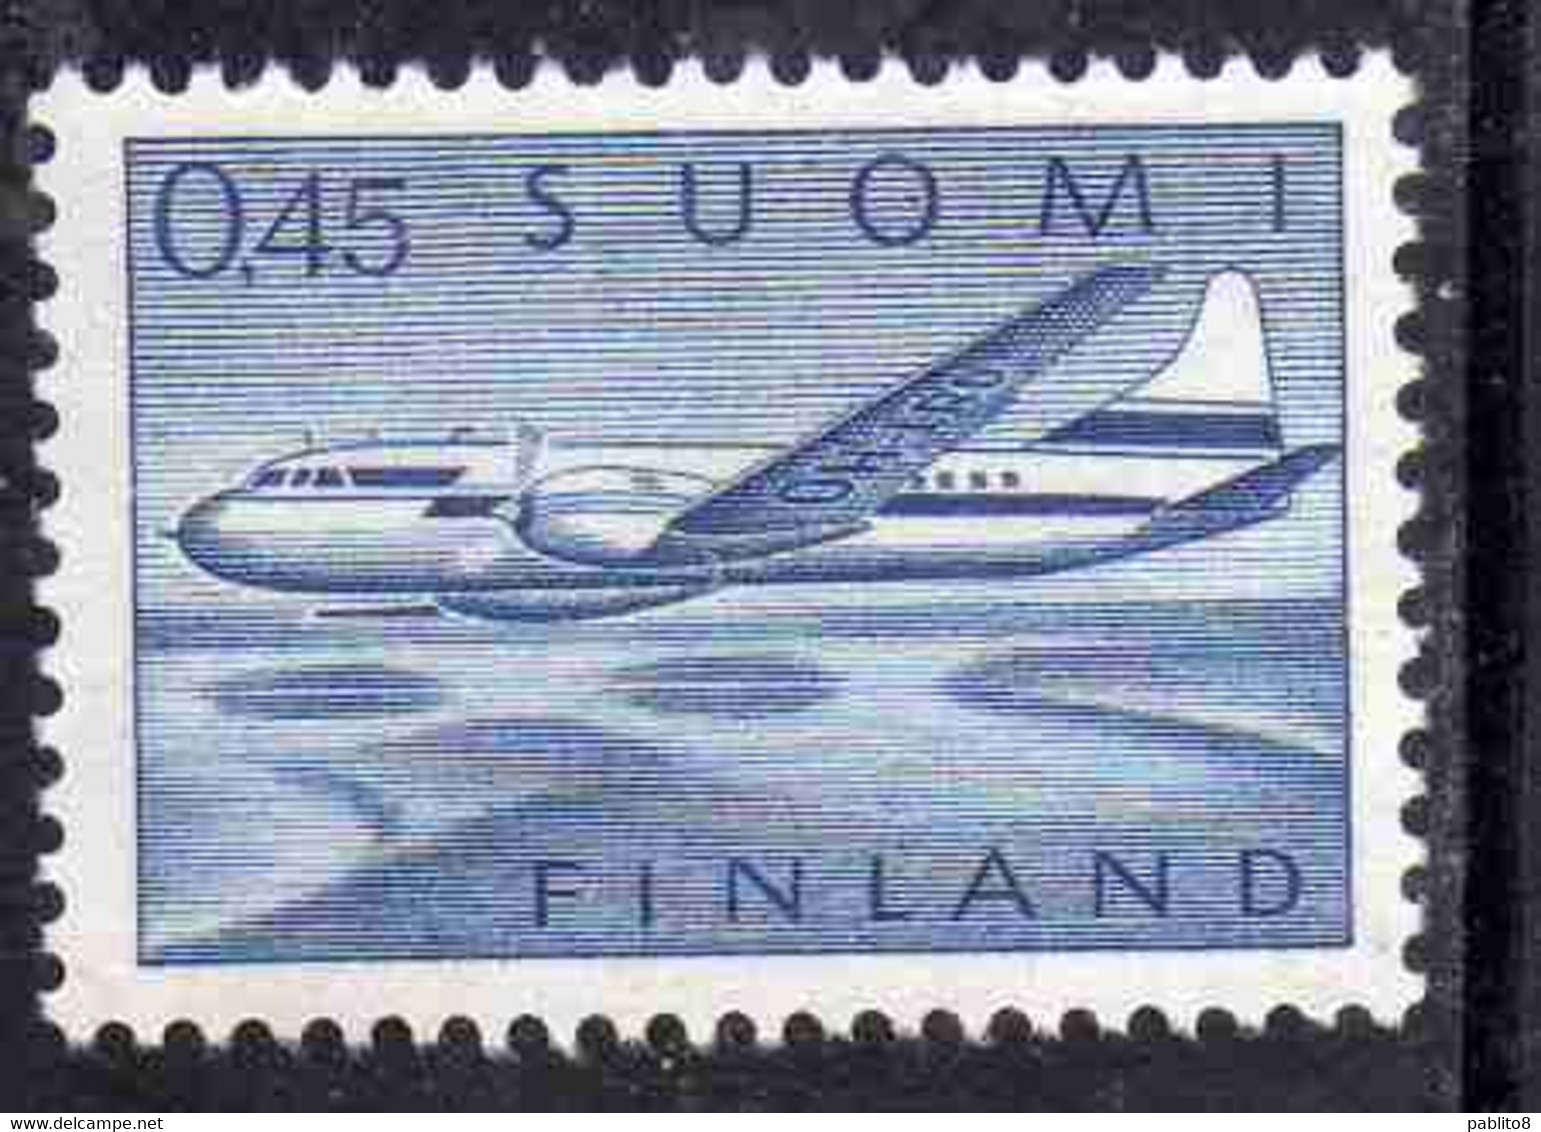 SUOMI FINLAND FINLANDIA FINLANDE 1963 AIR POST MAIL AIRMAIL CONVAIR OVER LAKES 0.45m 45p MNH - Nuevos